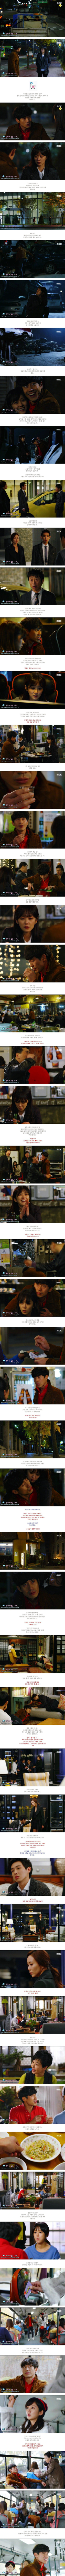 episode 3 captures for the Korean drama 'Mister Baek'